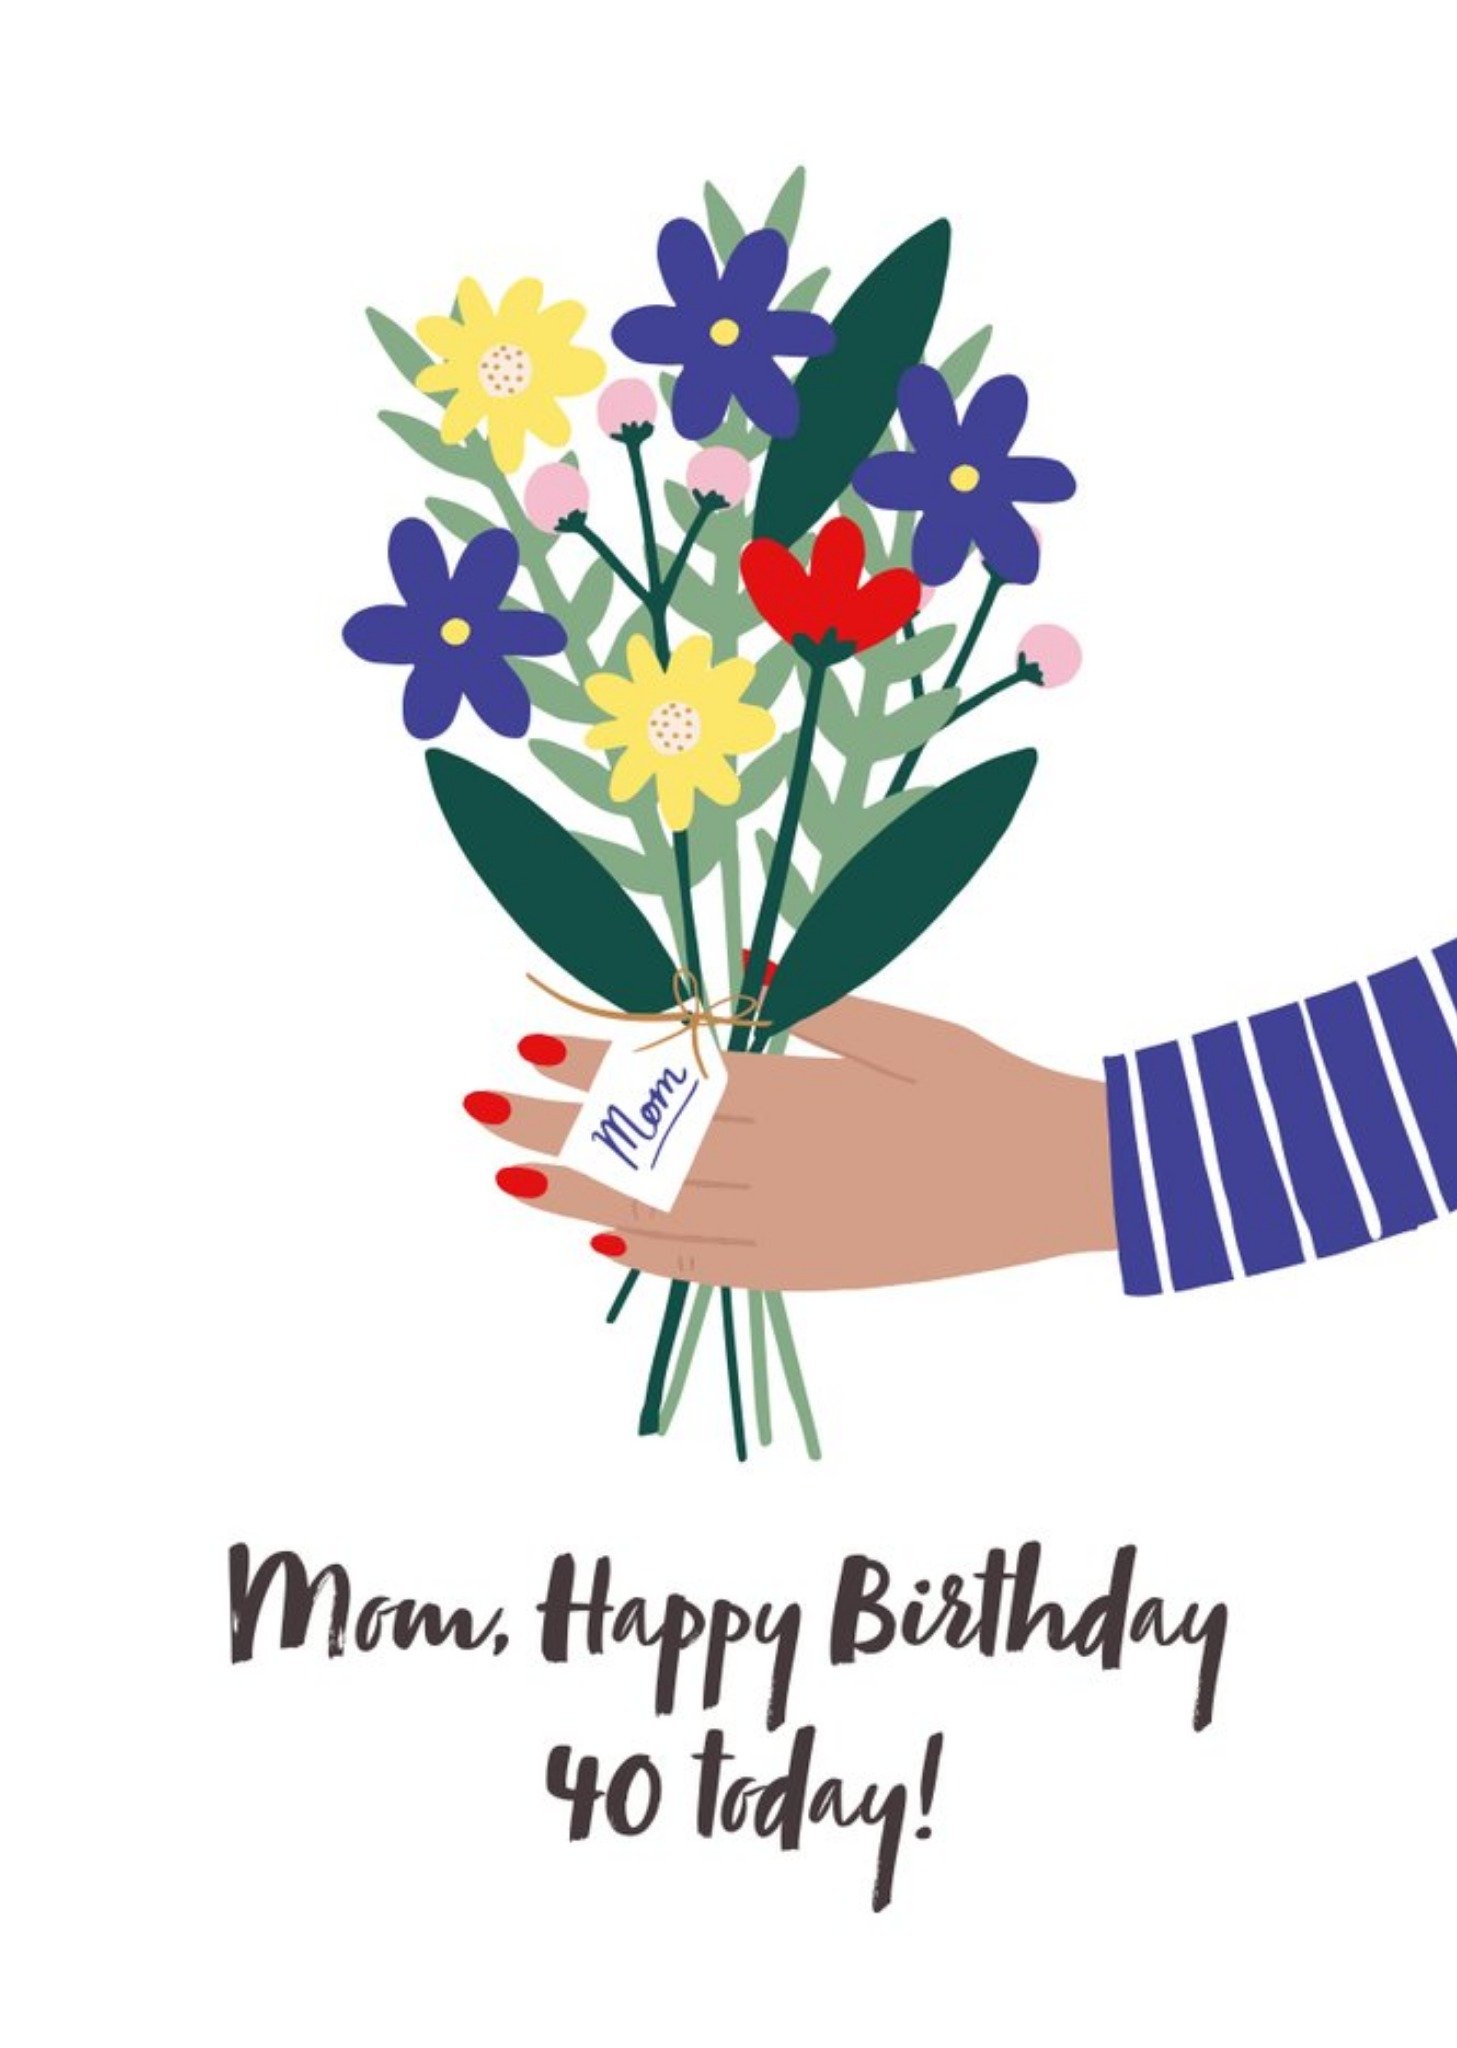 Moonpig Illustrated Cute Flower Bouquet Mom, Happy Birthday 40 Today Card Ecard